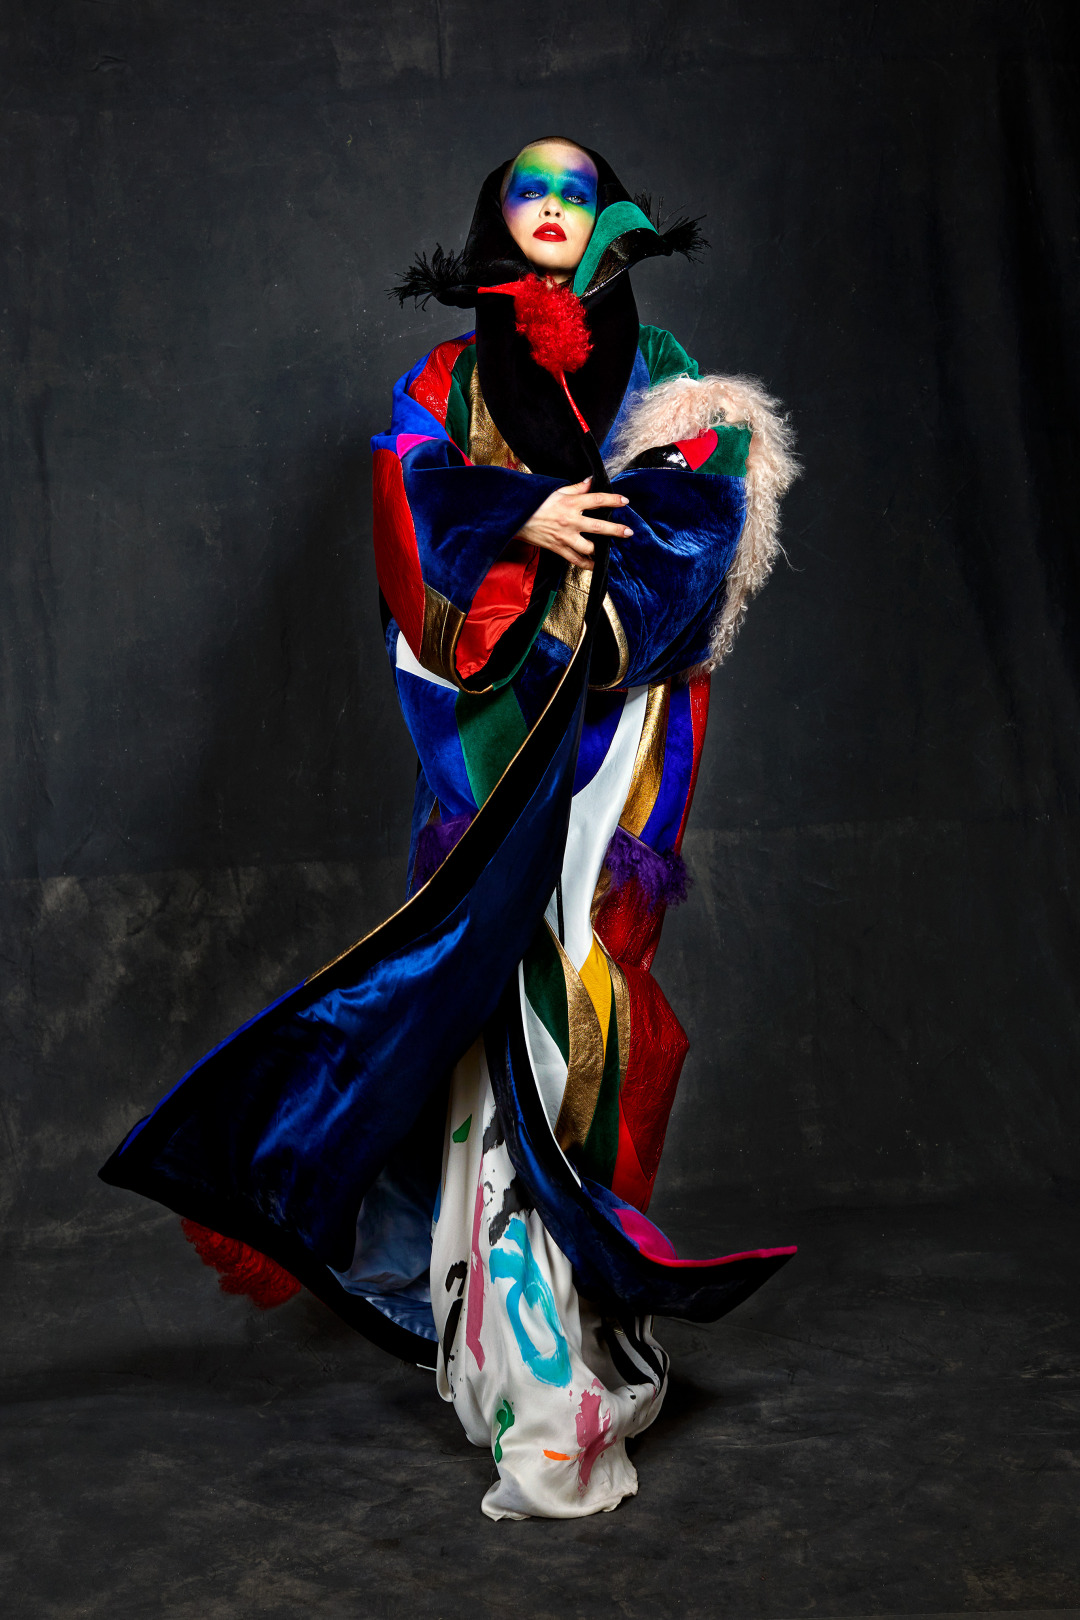 Ronald Van Der Kemp 2020-21 Sonbahar/Kış Couture